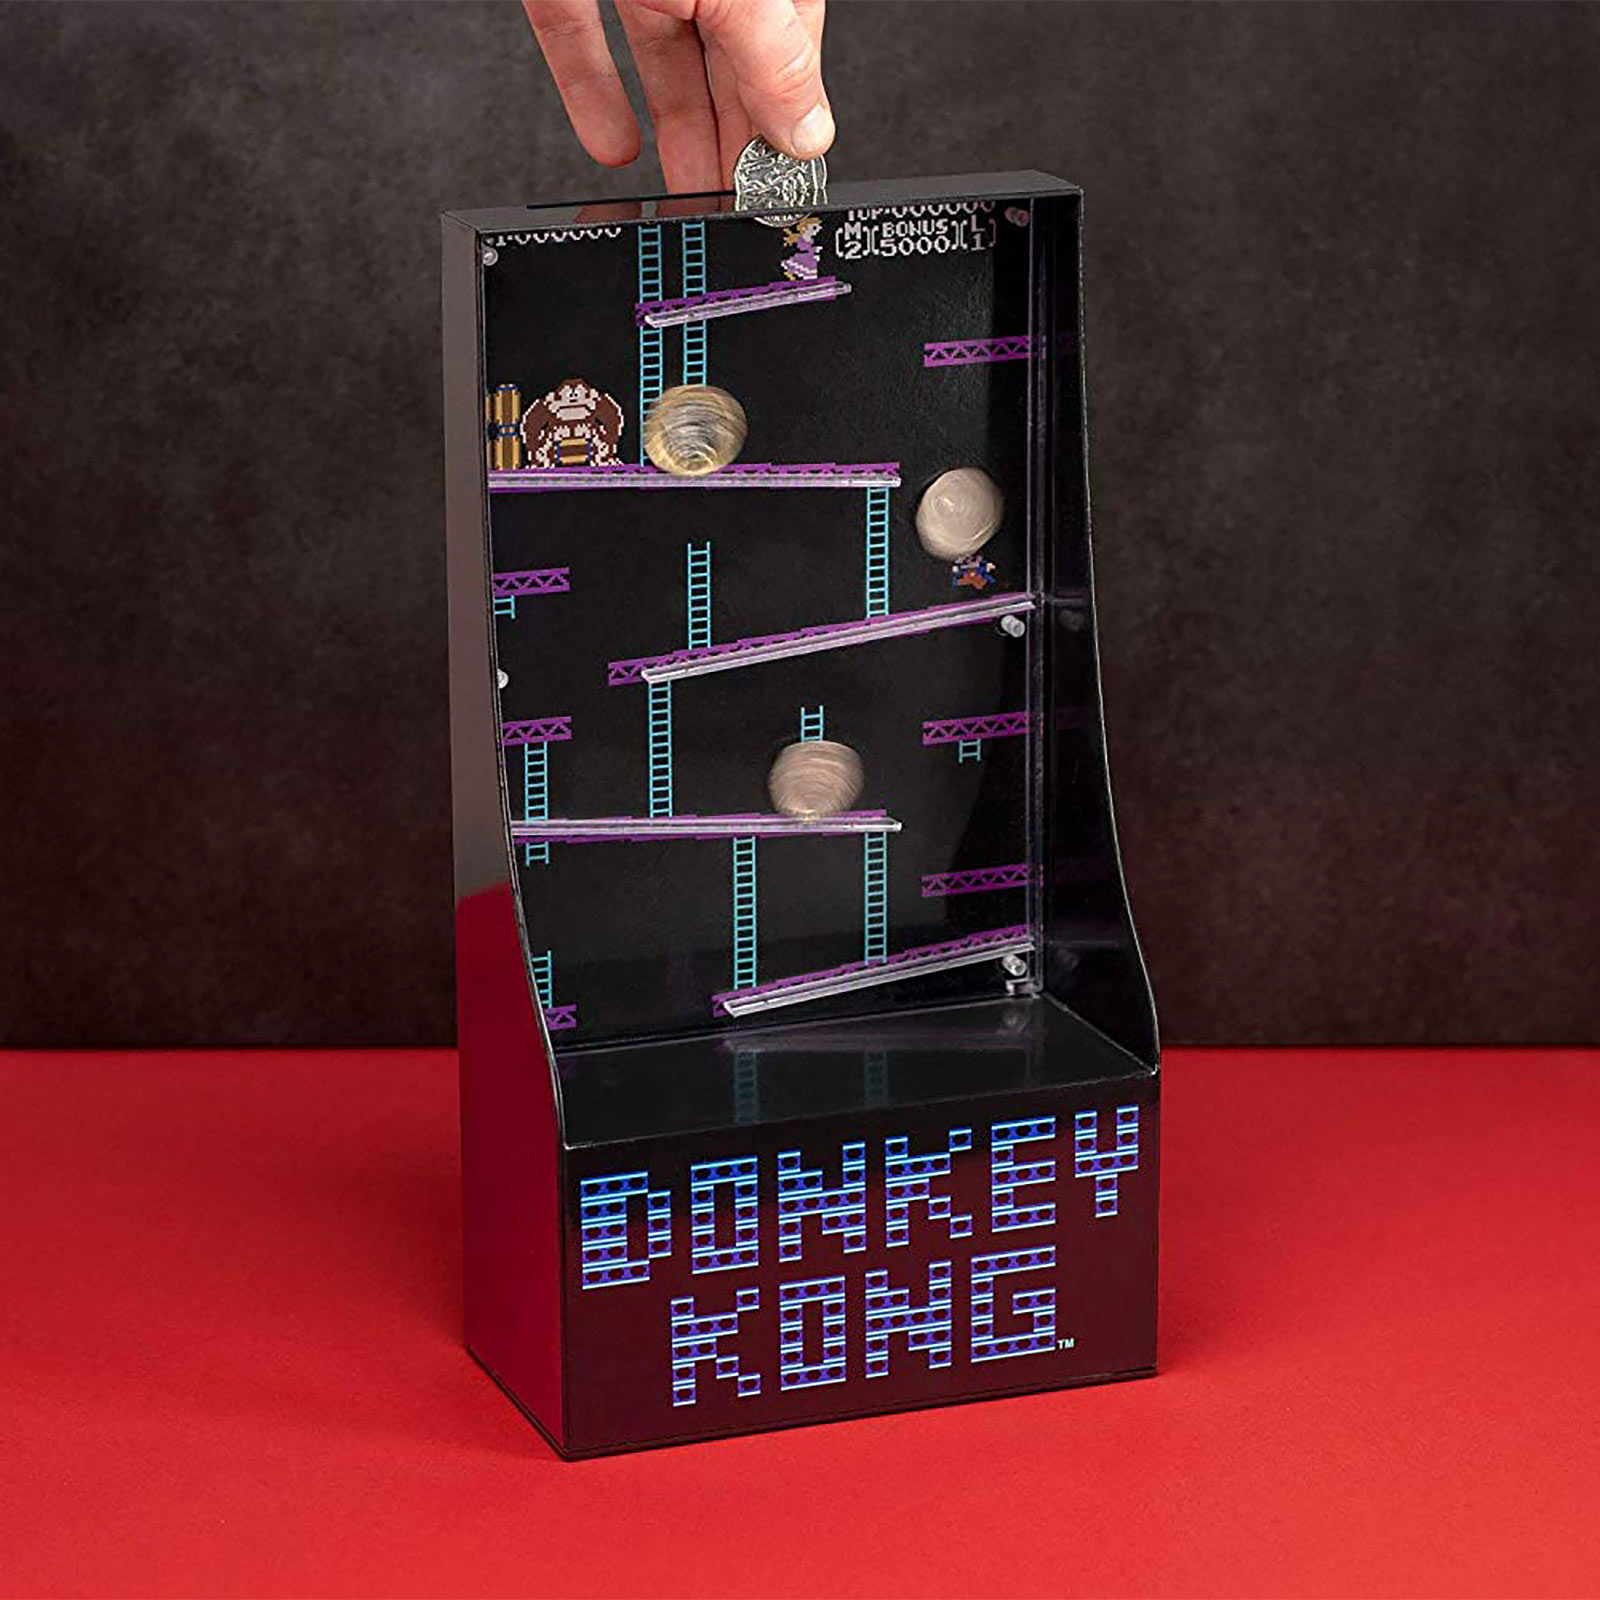 Donkey Kong - Arcade Game Money Box